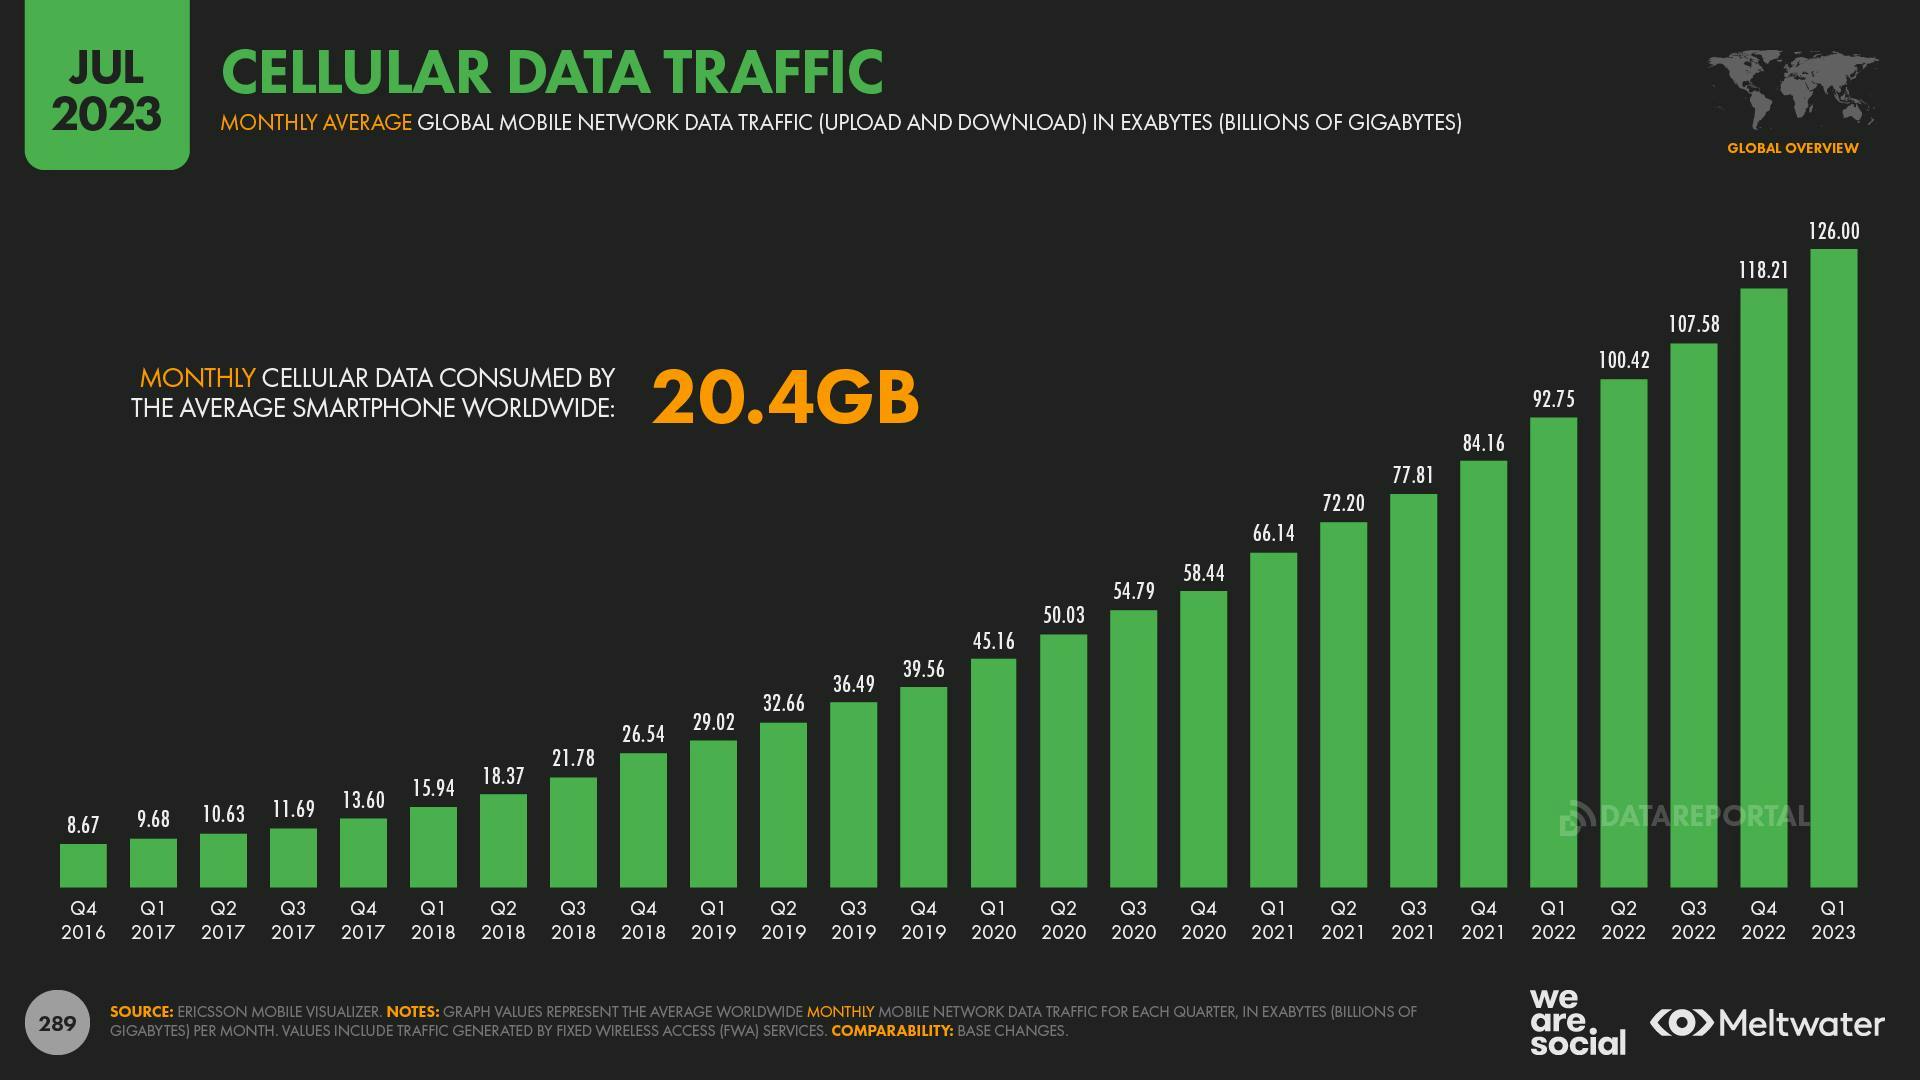 Cellular data traffic